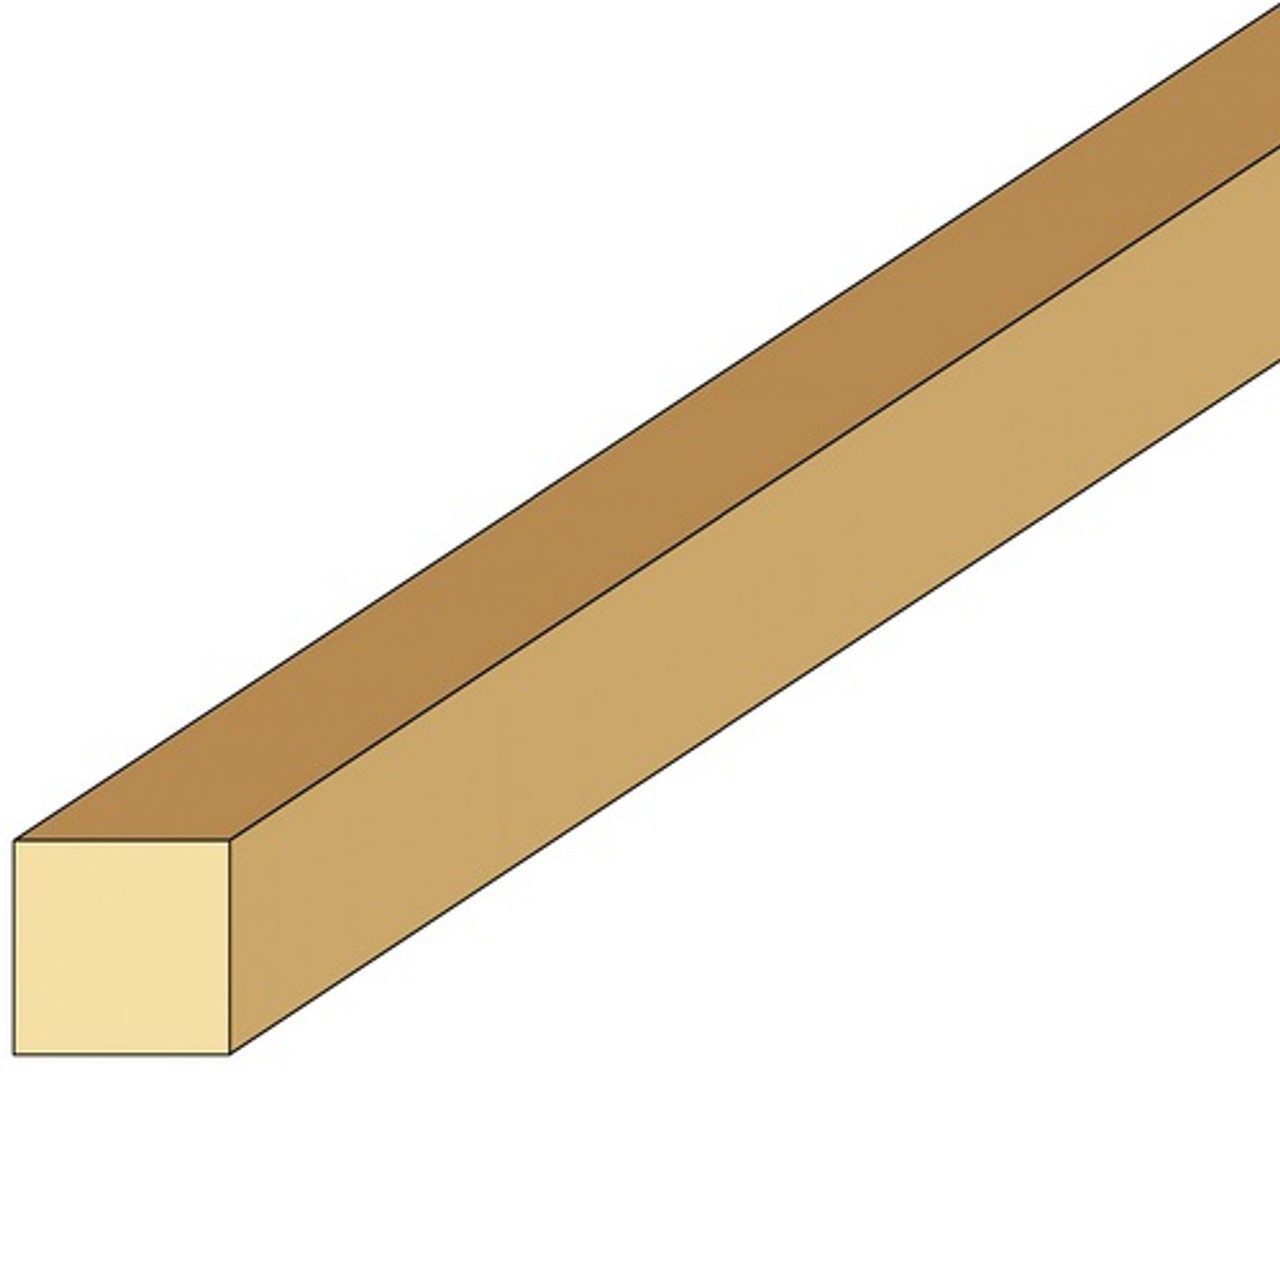 Illustration of 1/4" x 1/4" stripwood